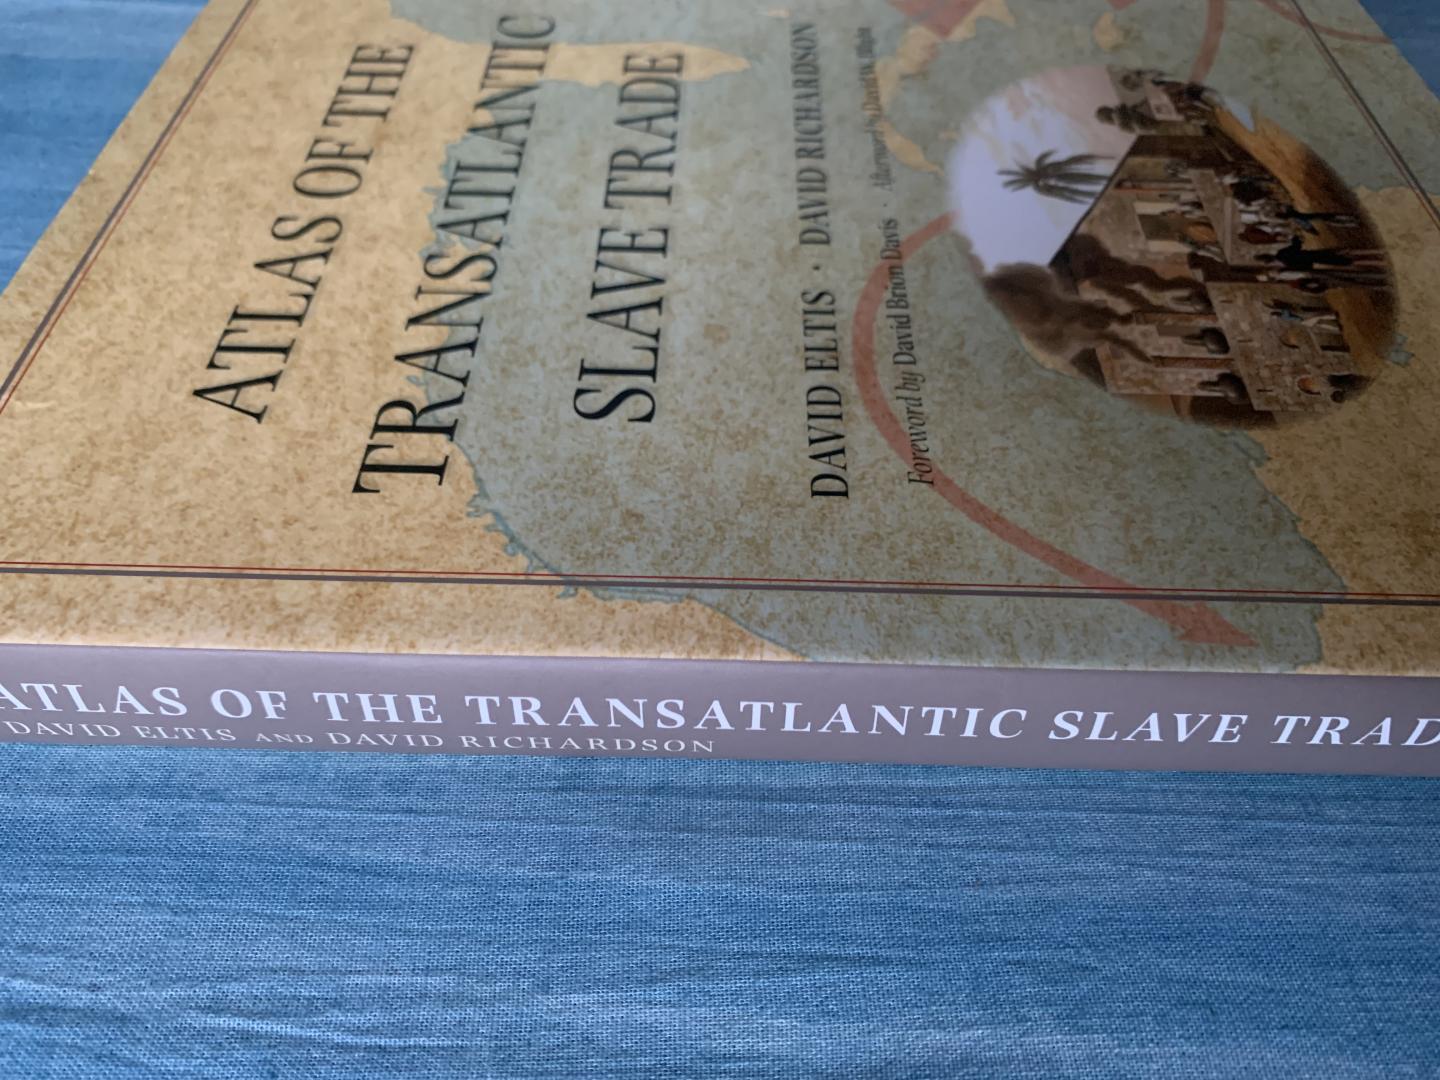 Eltis, David & Richardson, David - Atlas of the Transatlantic Slave Trade